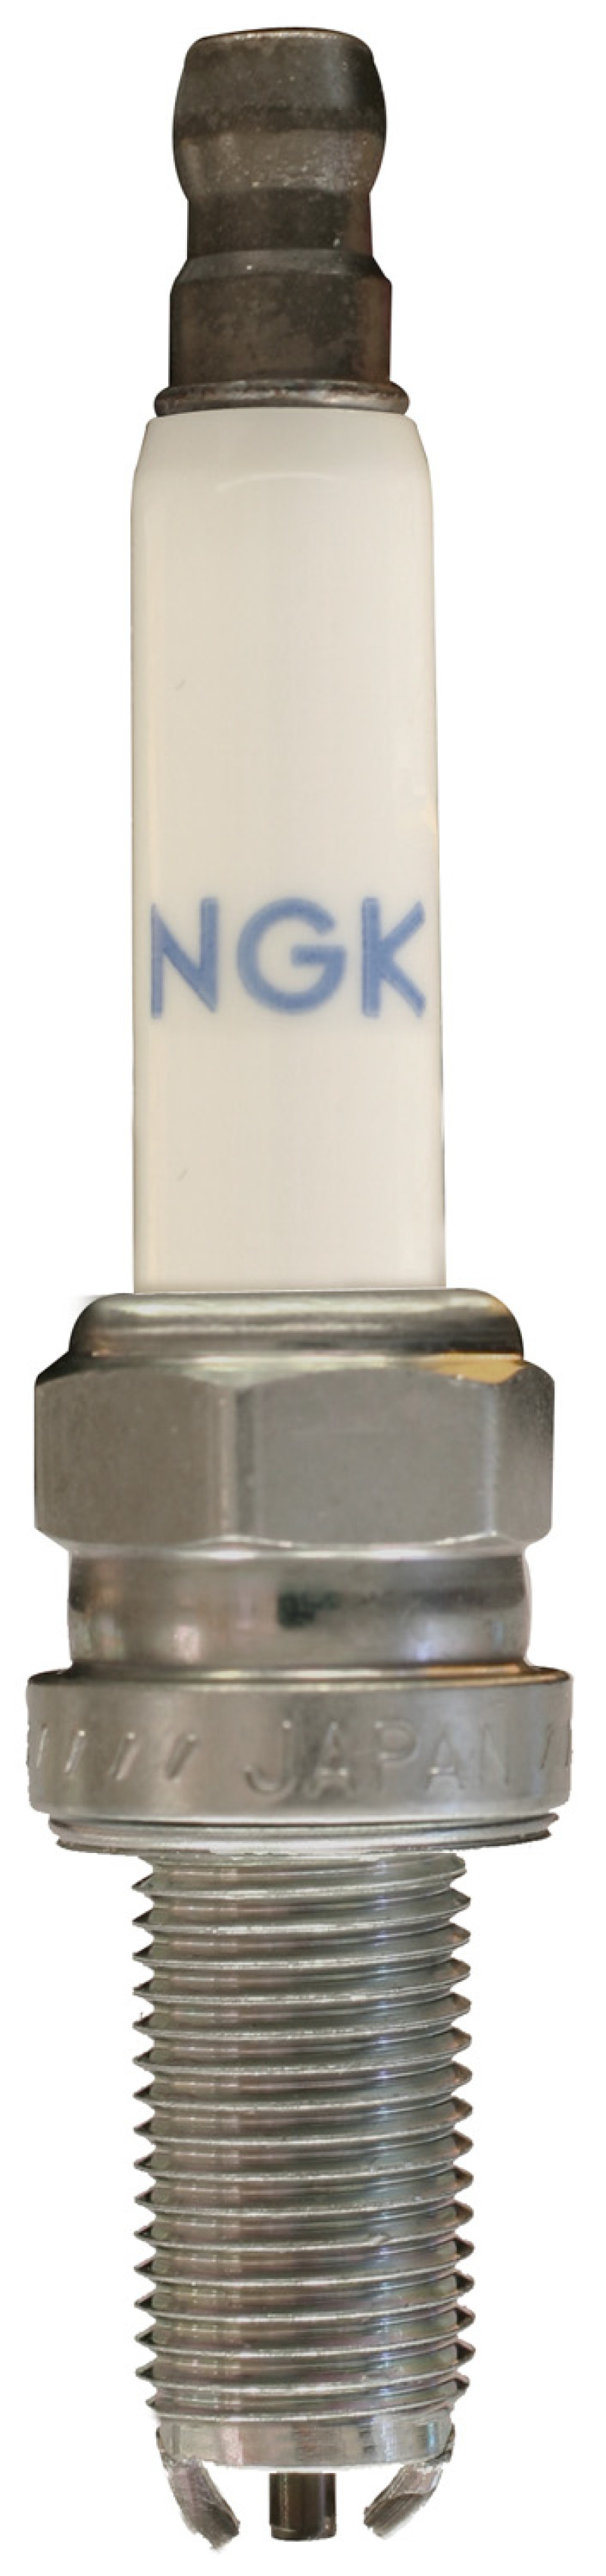 NGK Nickel Spark Plug Box of 10 (MAR9A-J) - 6869